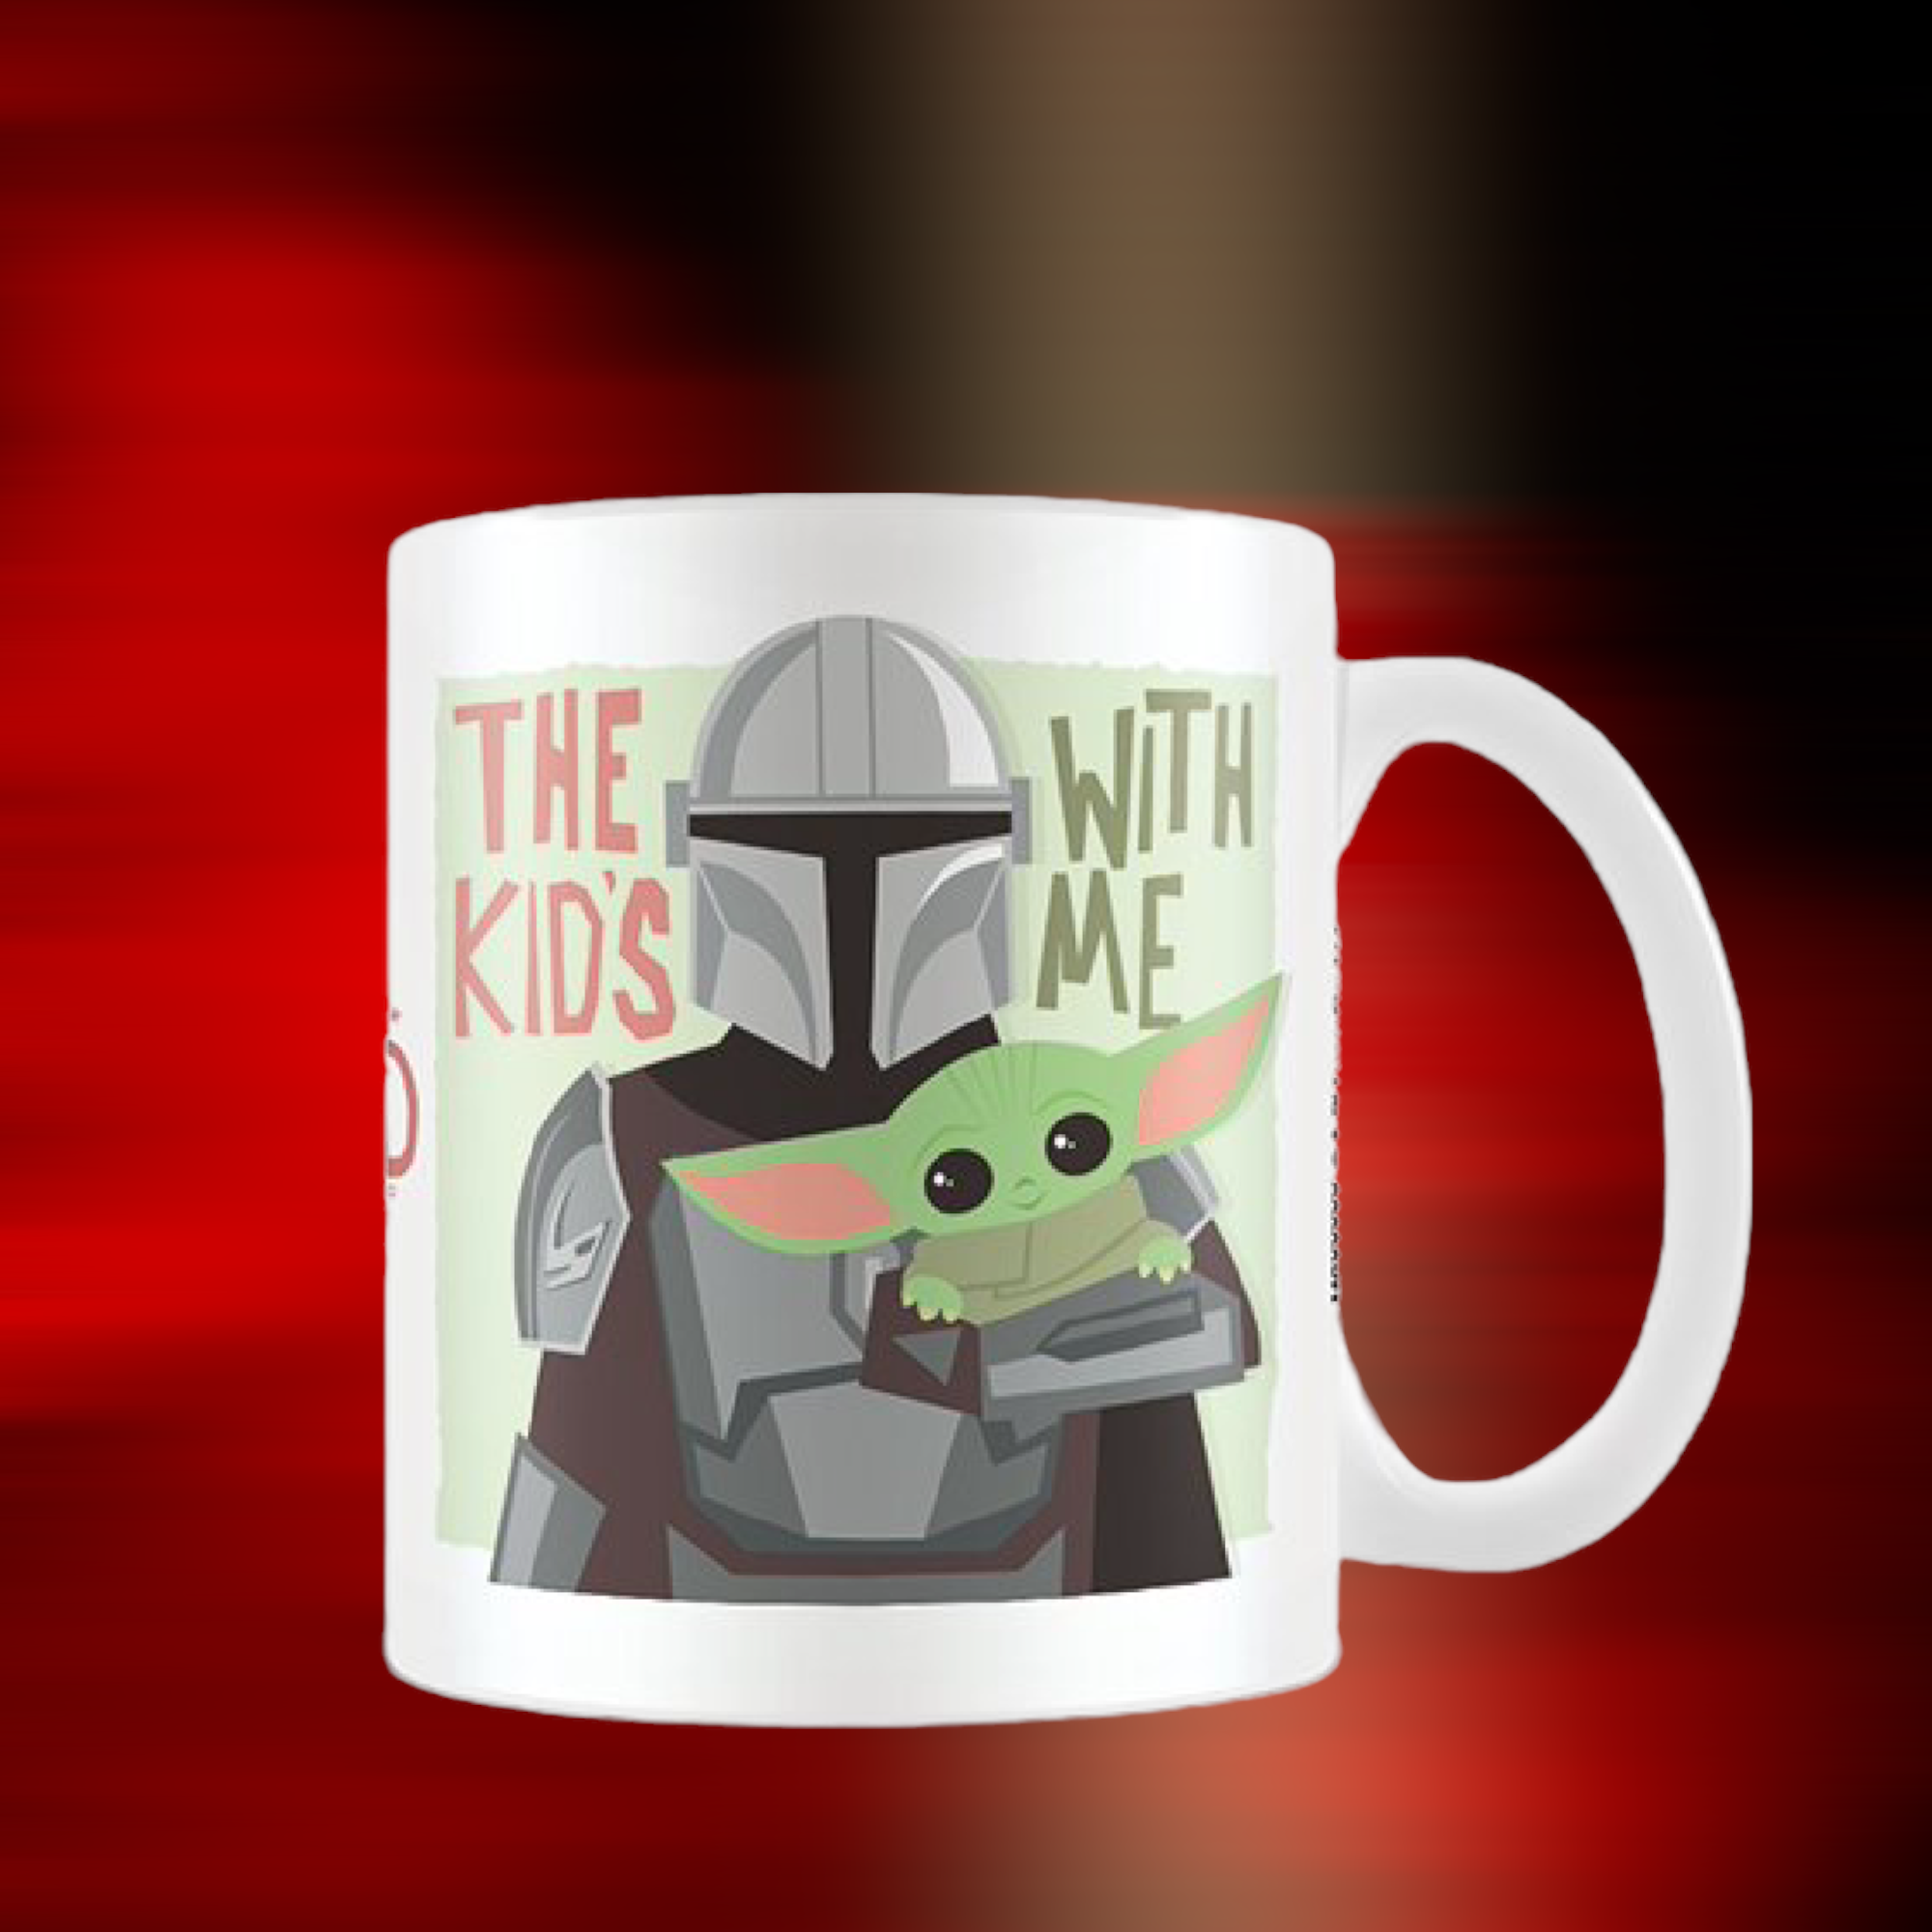 Star Wars - The Mandalorian : Mug The kid with me